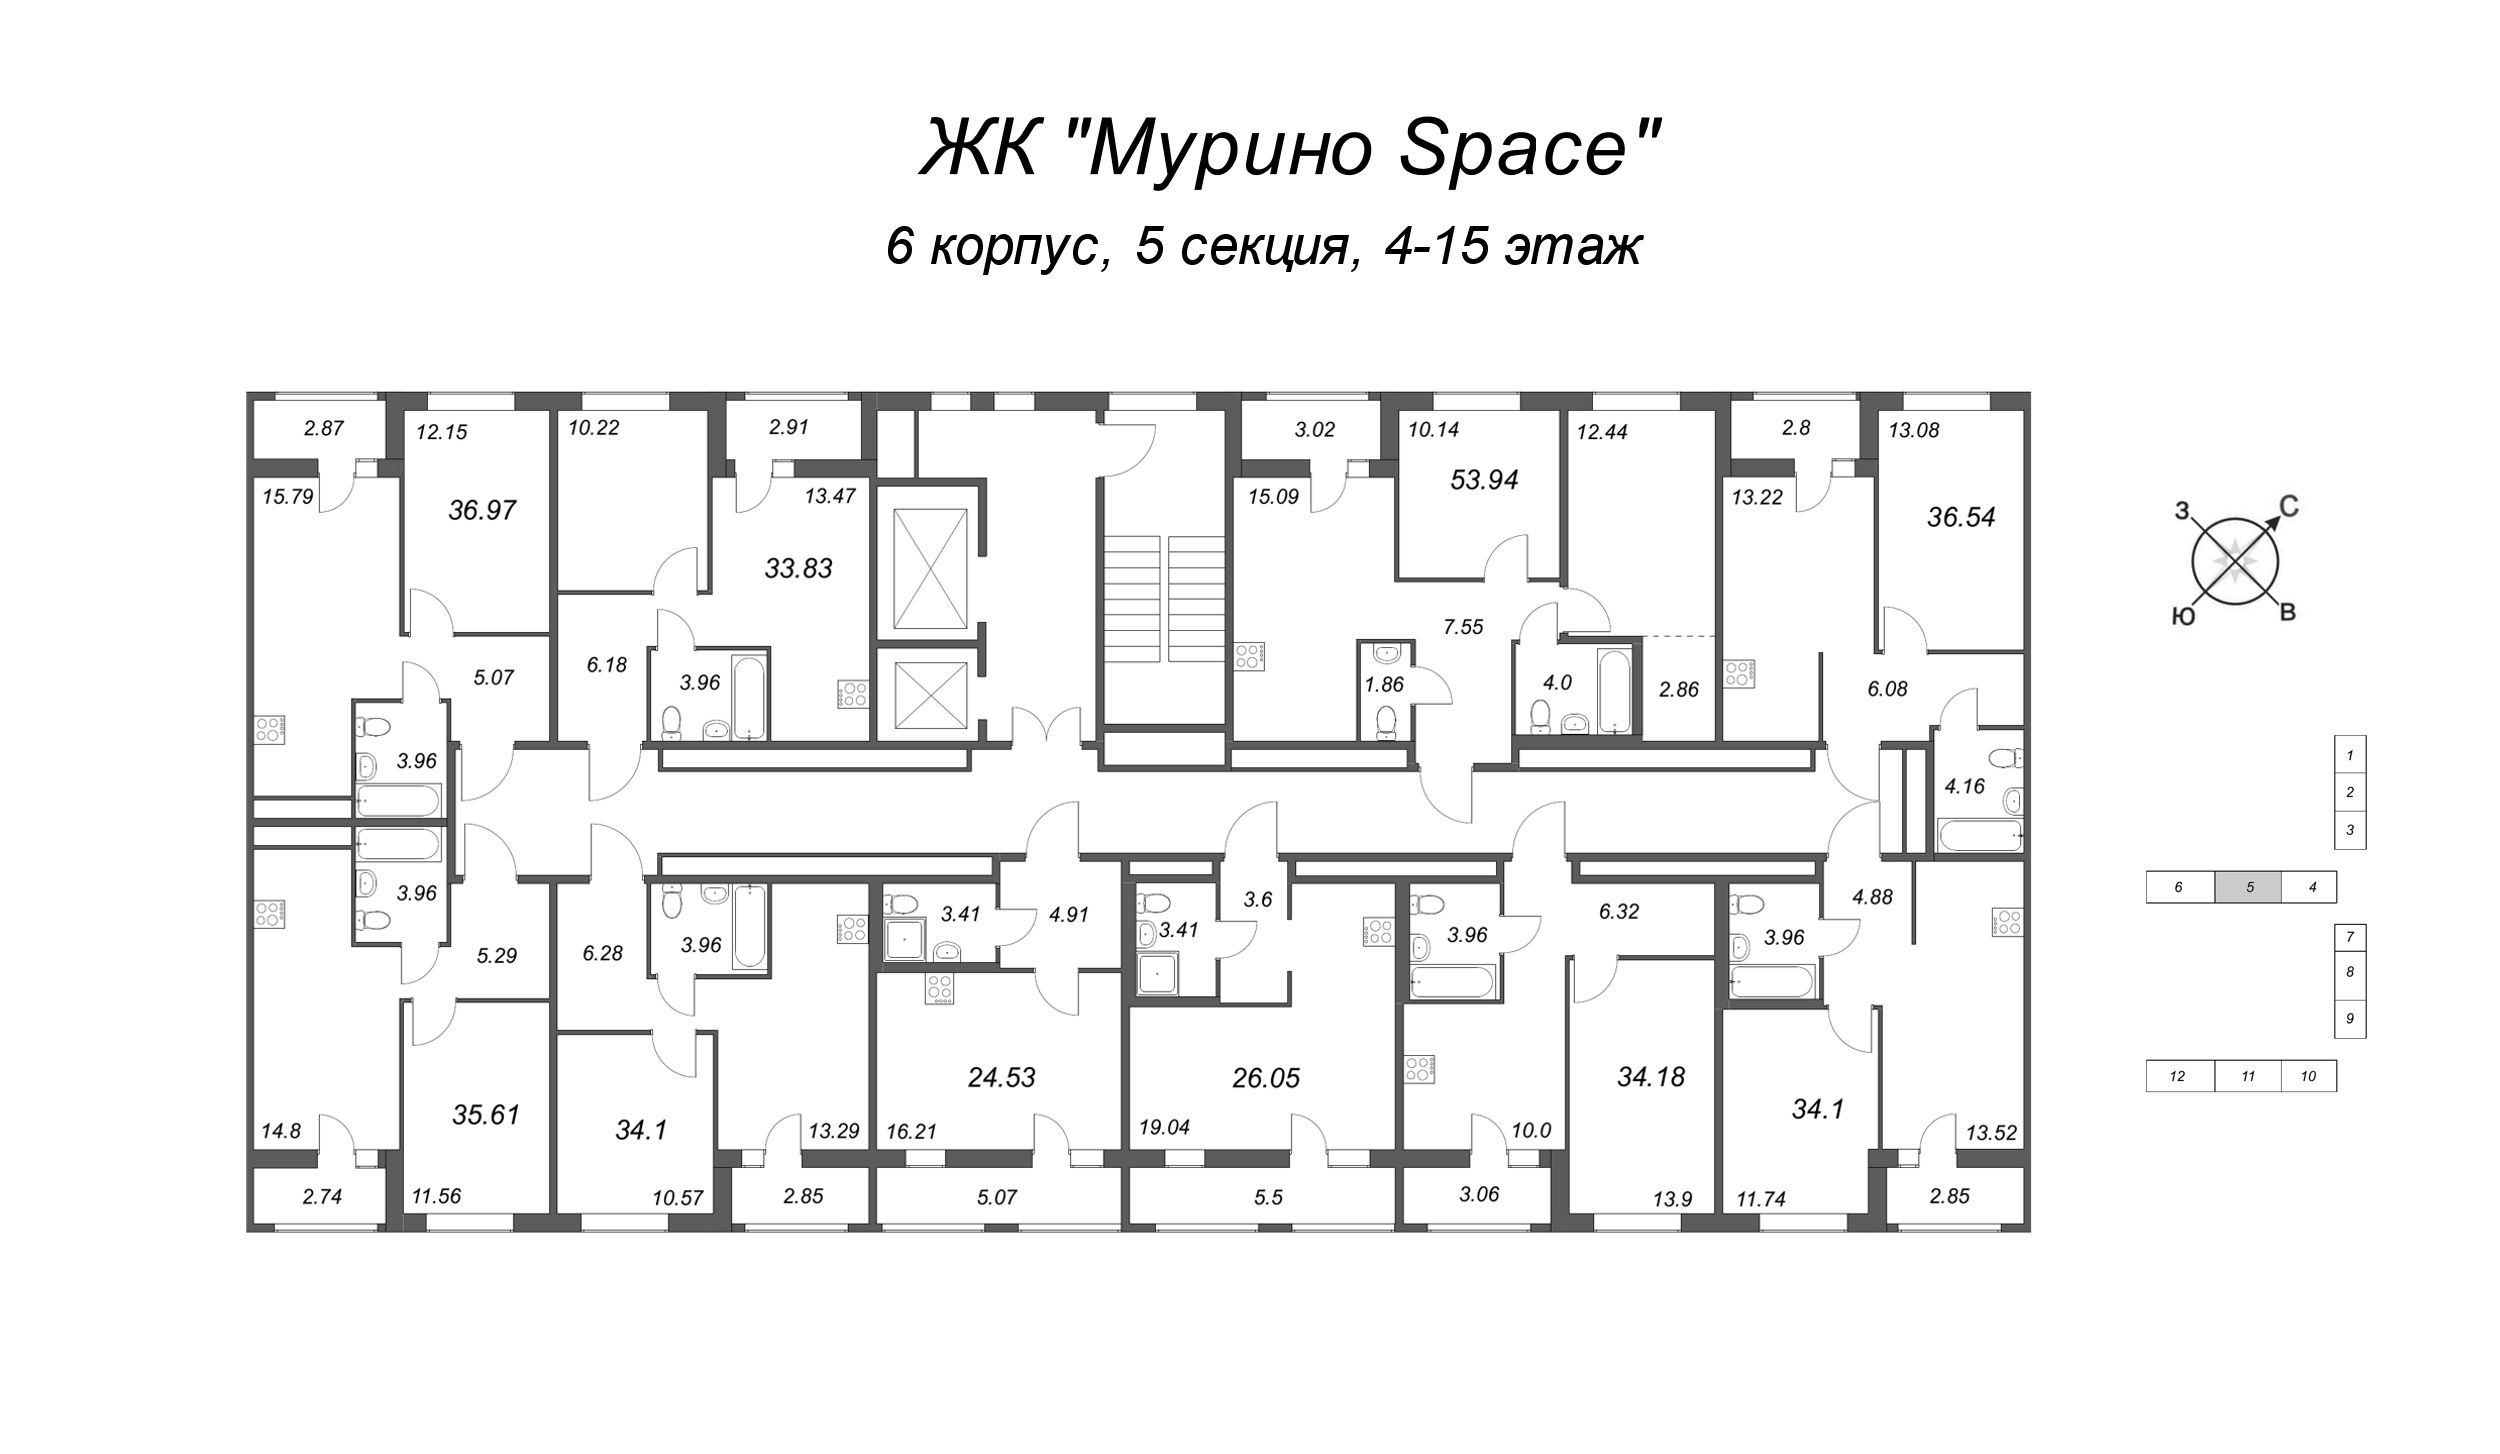 2-комнатная (Евро) квартира, 33.83 м² - планировка этажа